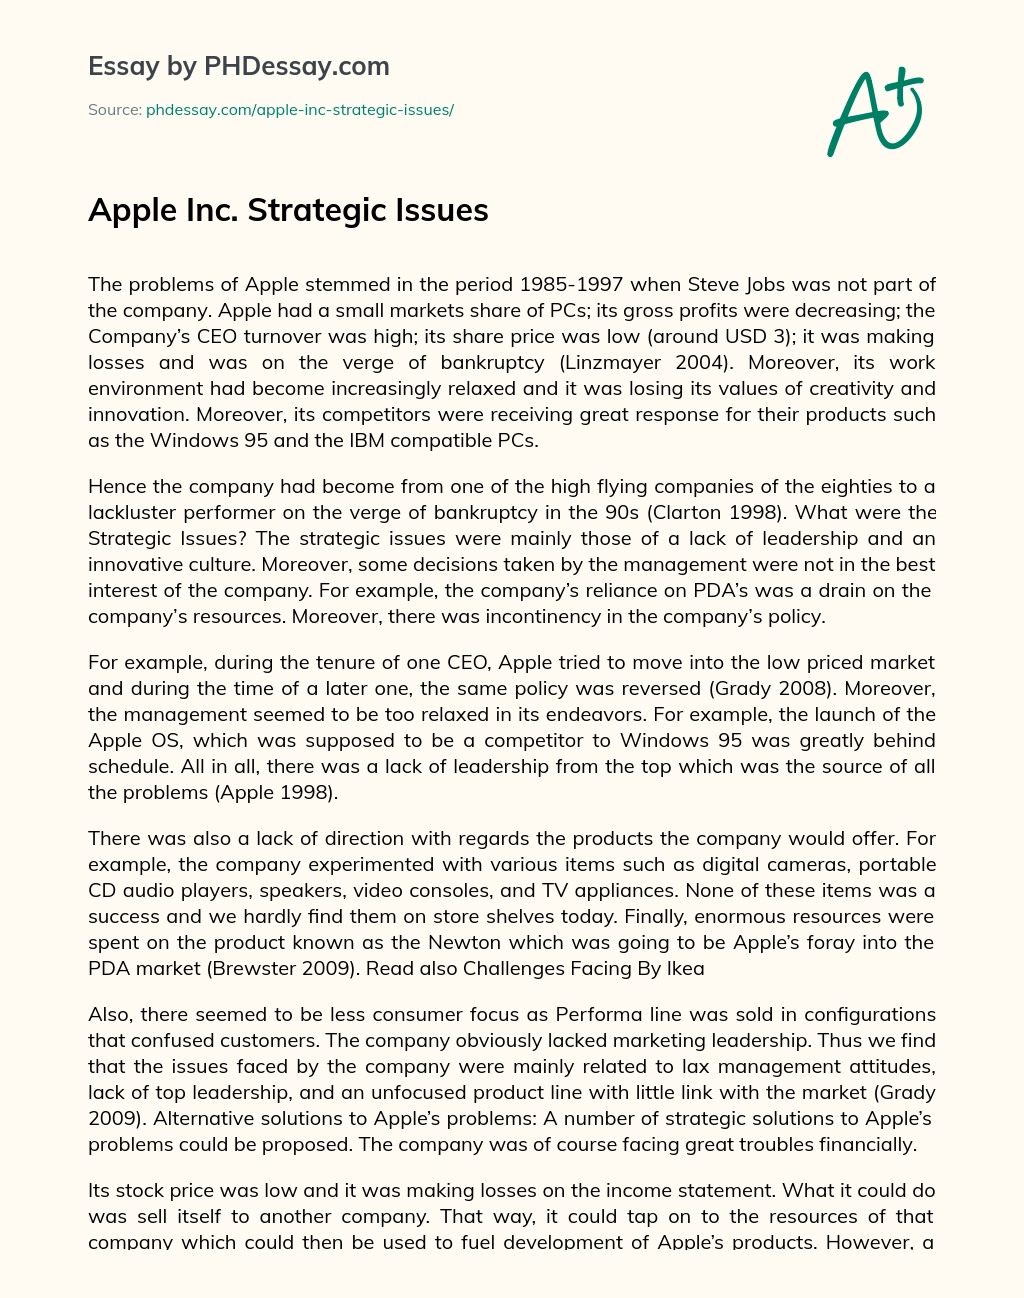 Apple Inc. Strategic Issues essay